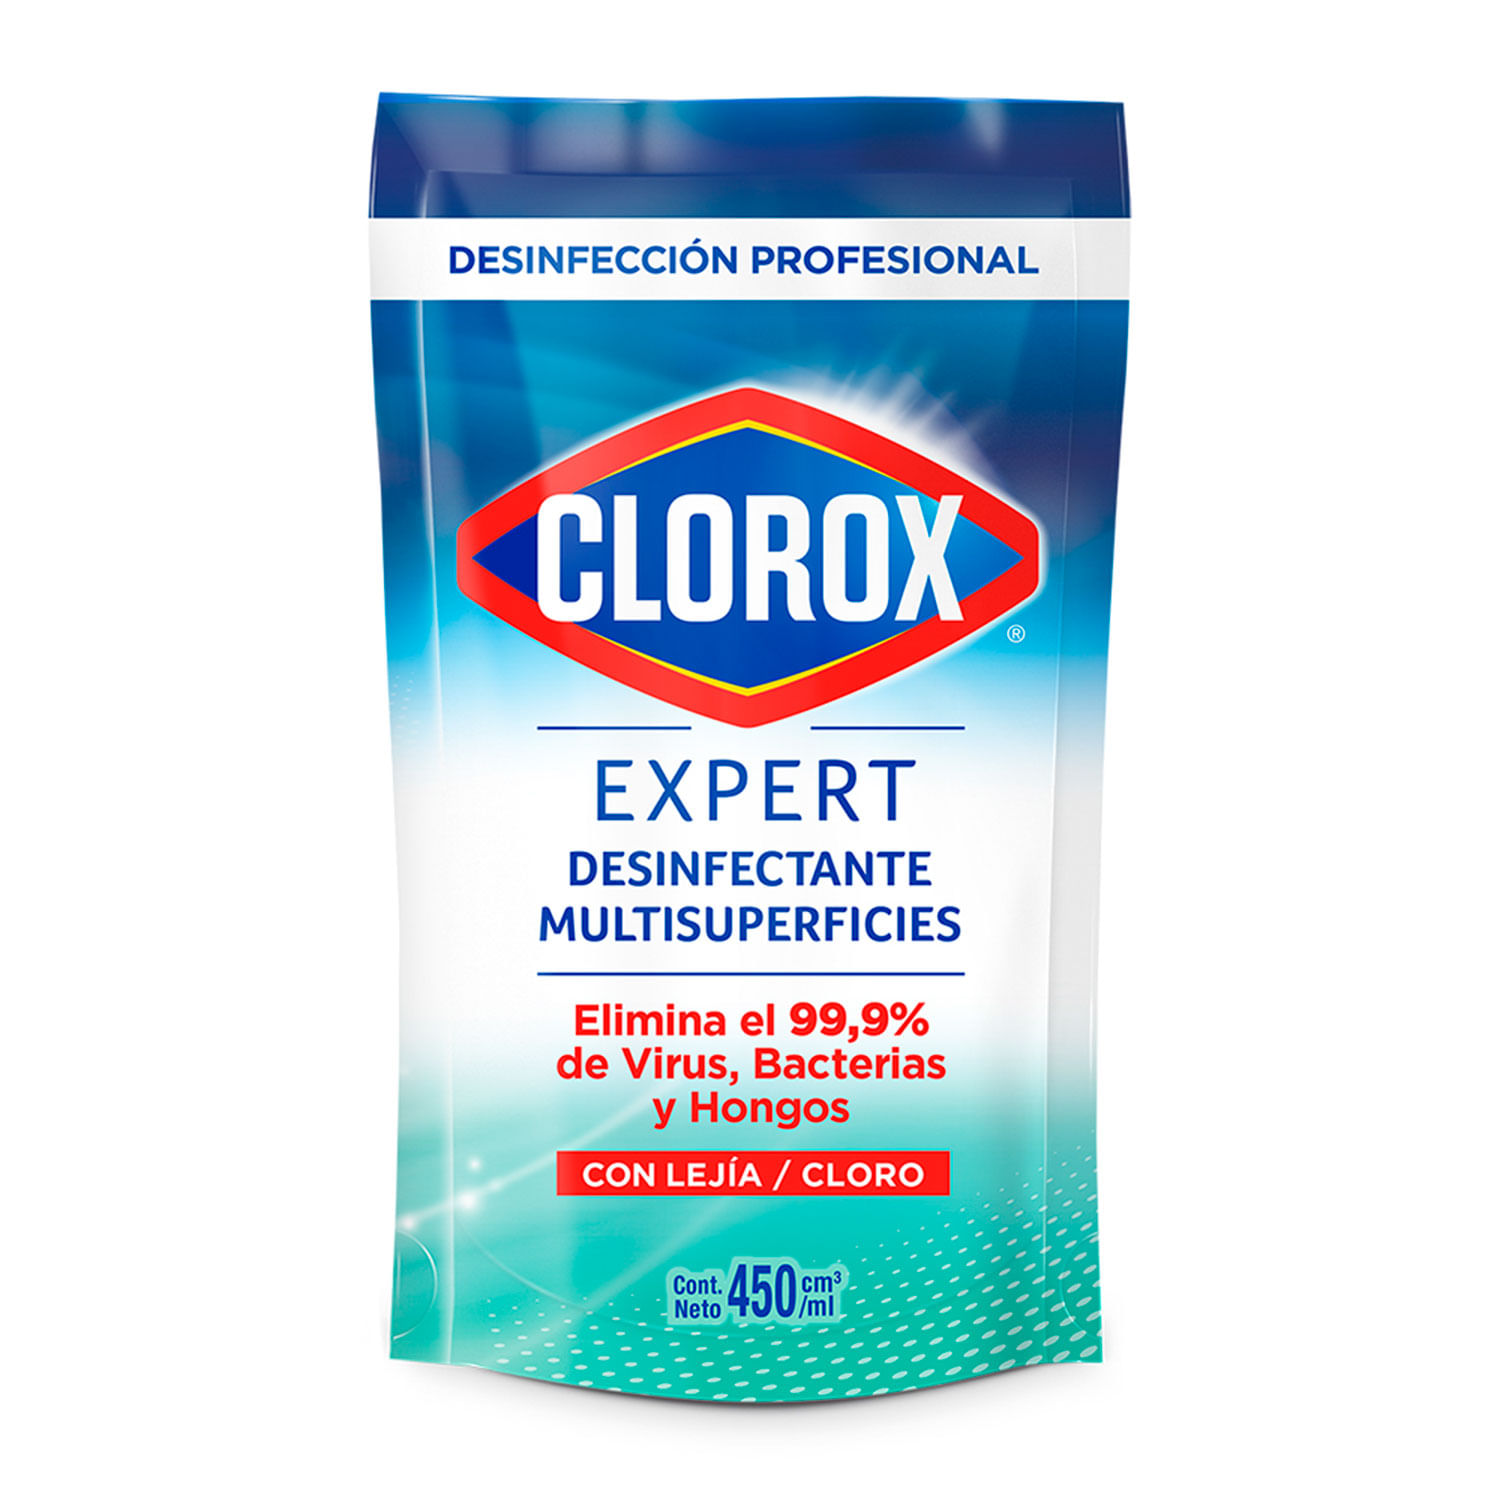 Clorox Antihongos 500 ml